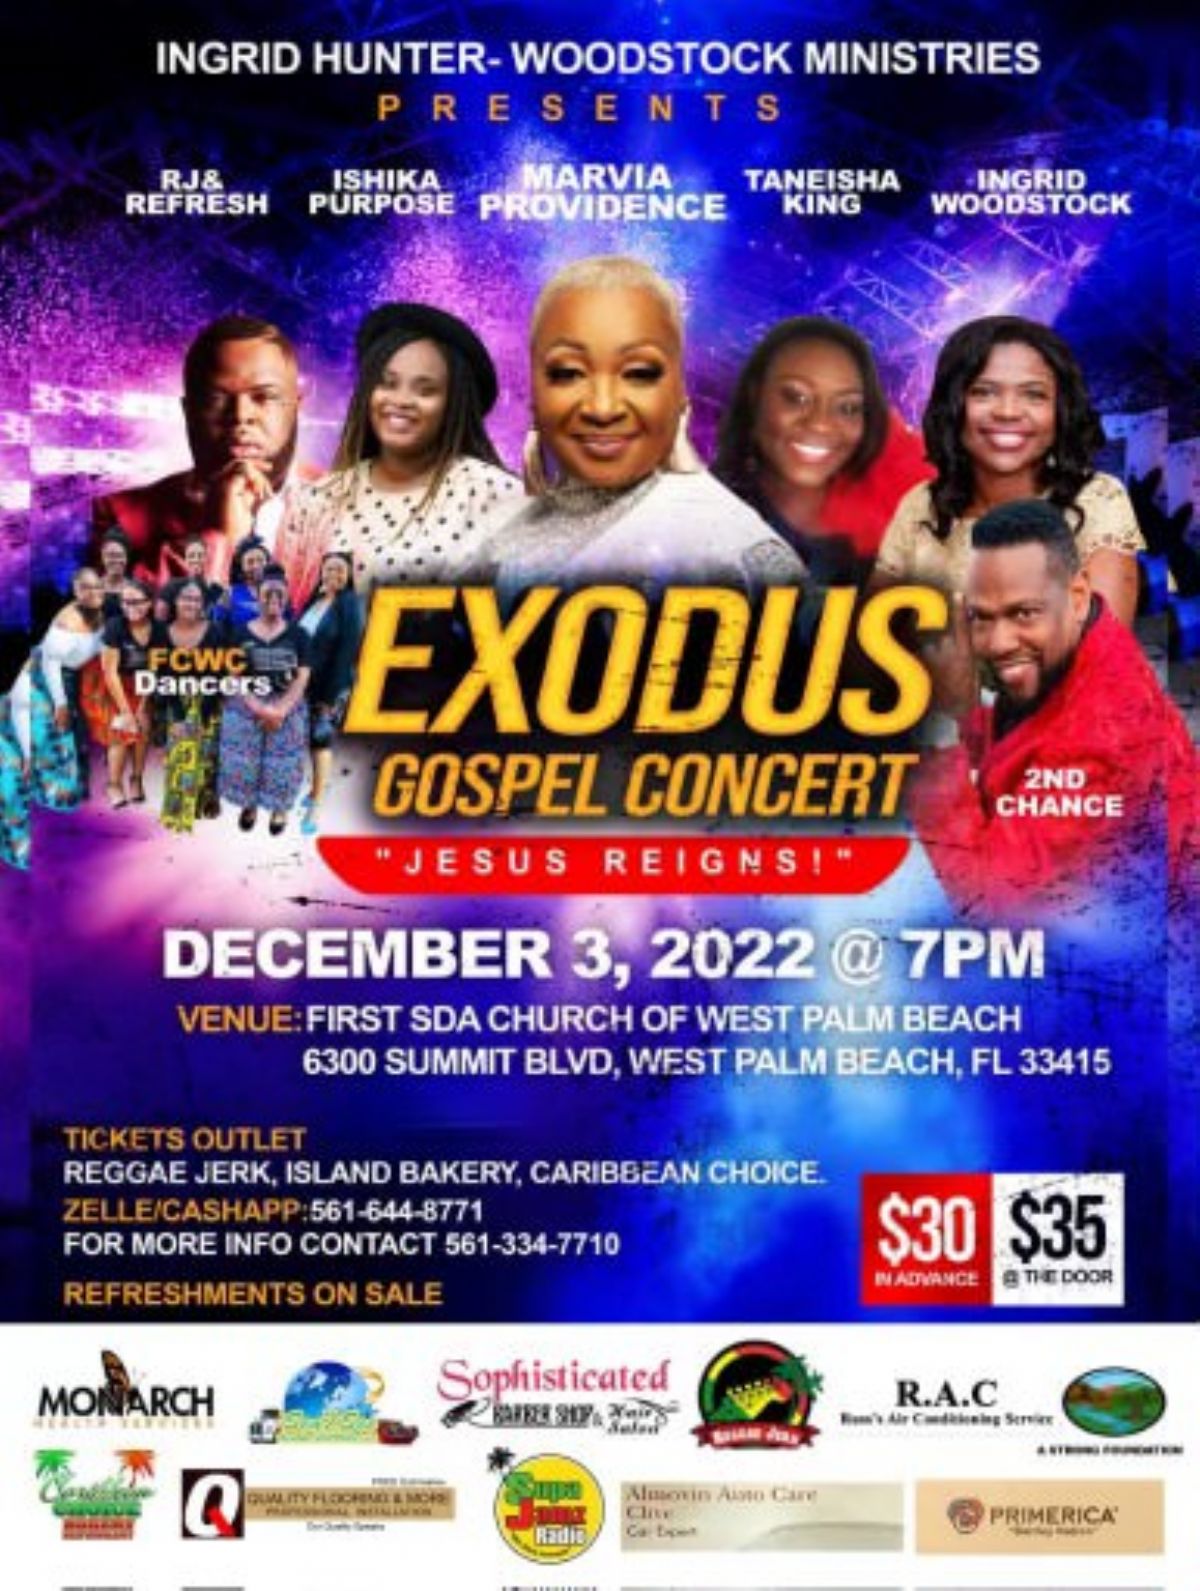 EXODUS Gospel Concert Pay Per View